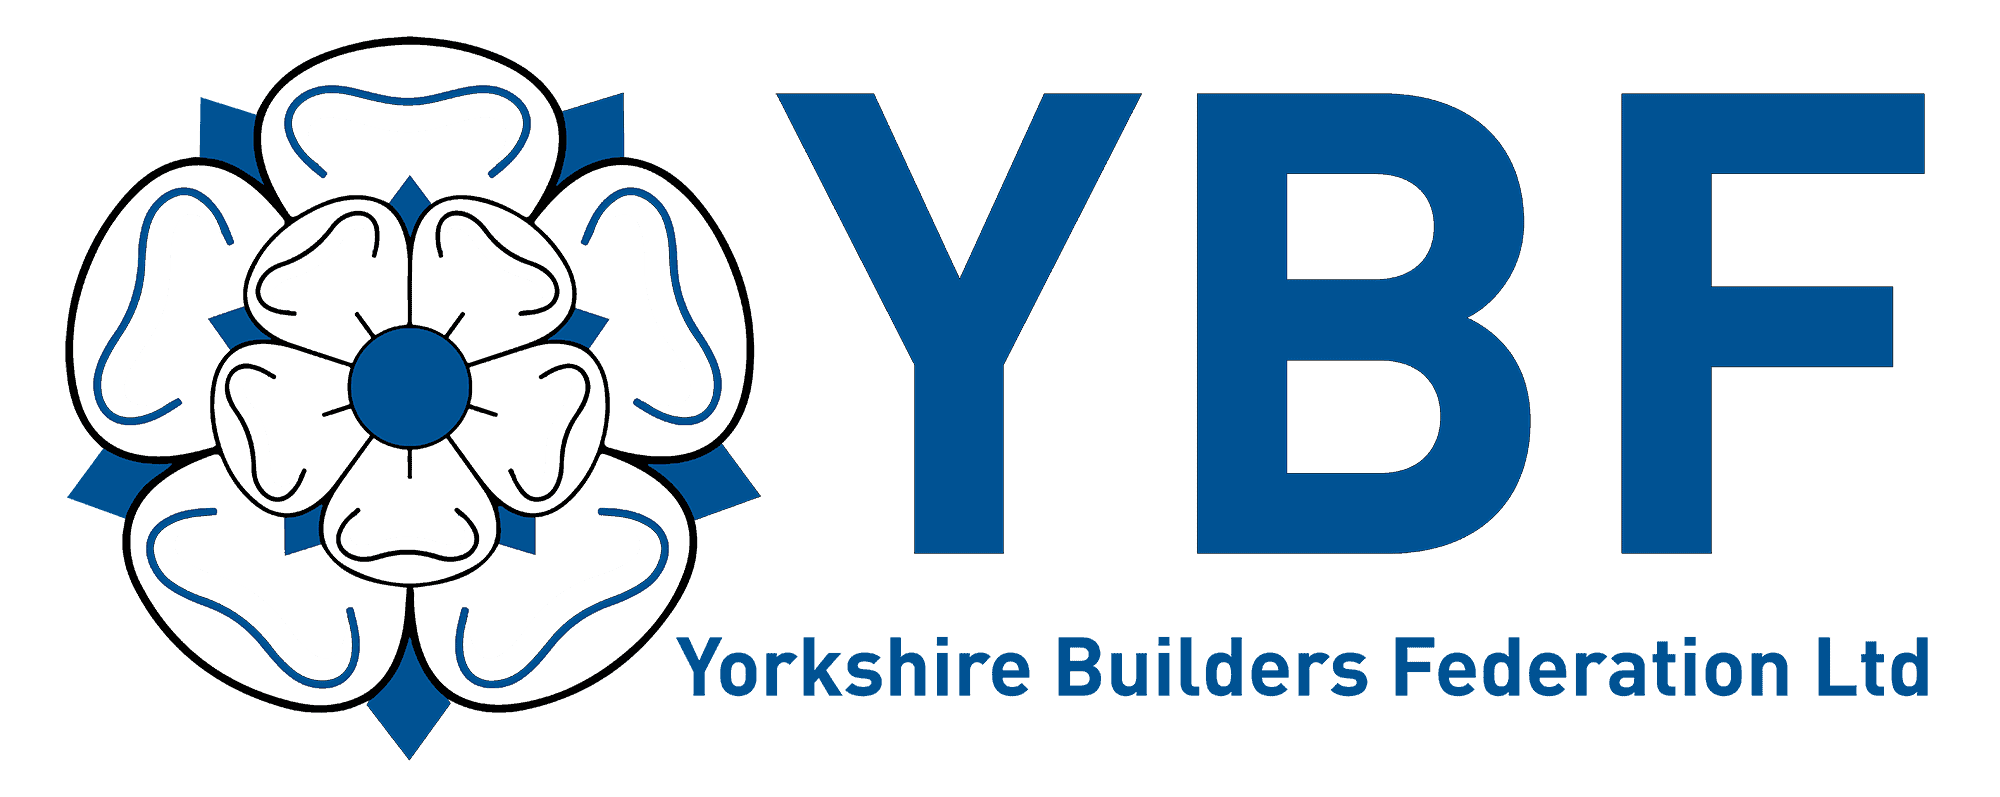 Yorkshire Builders Federation Ltd Logo